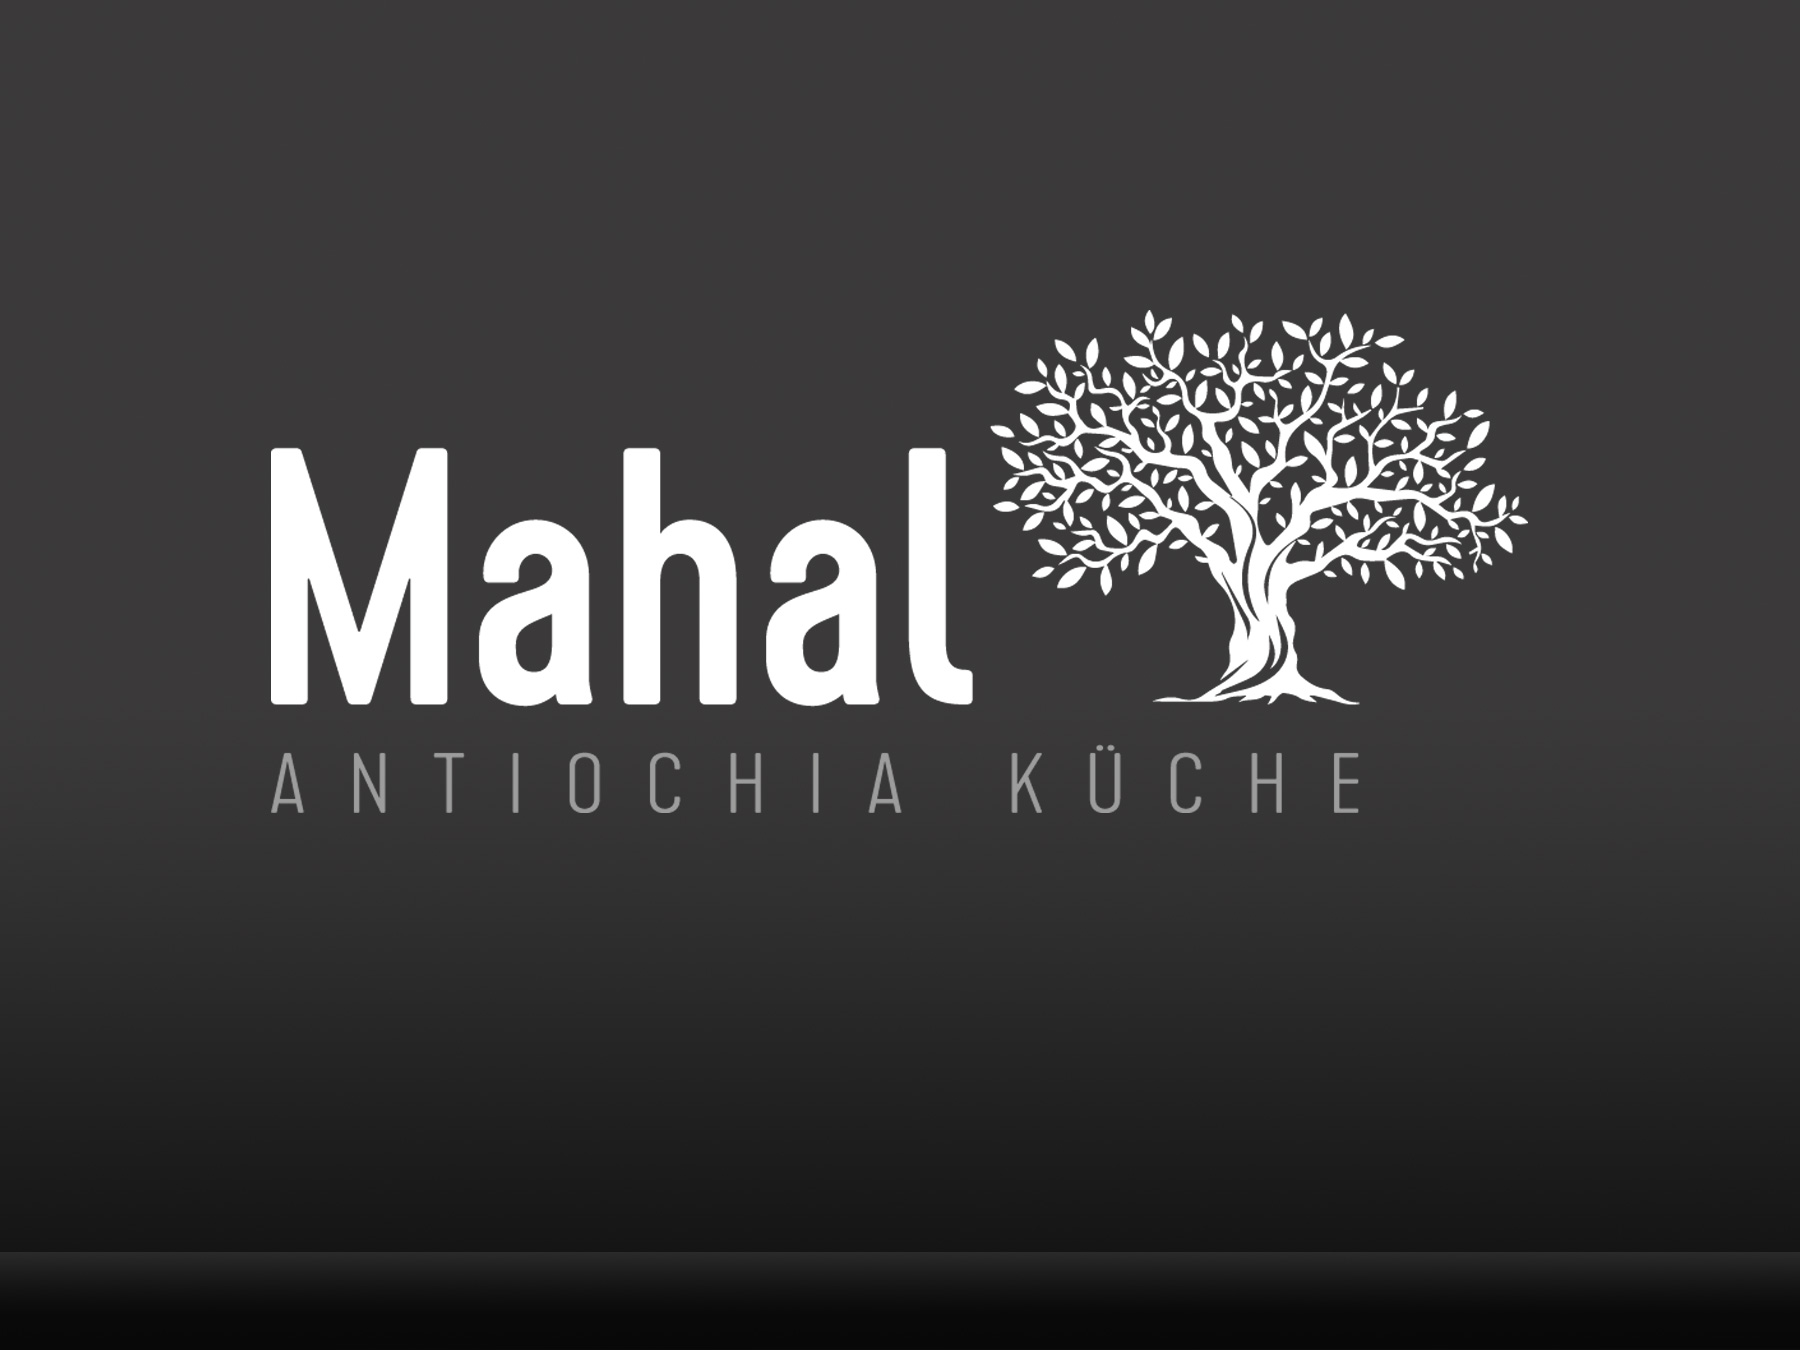 Mahal - Antiochia Küche